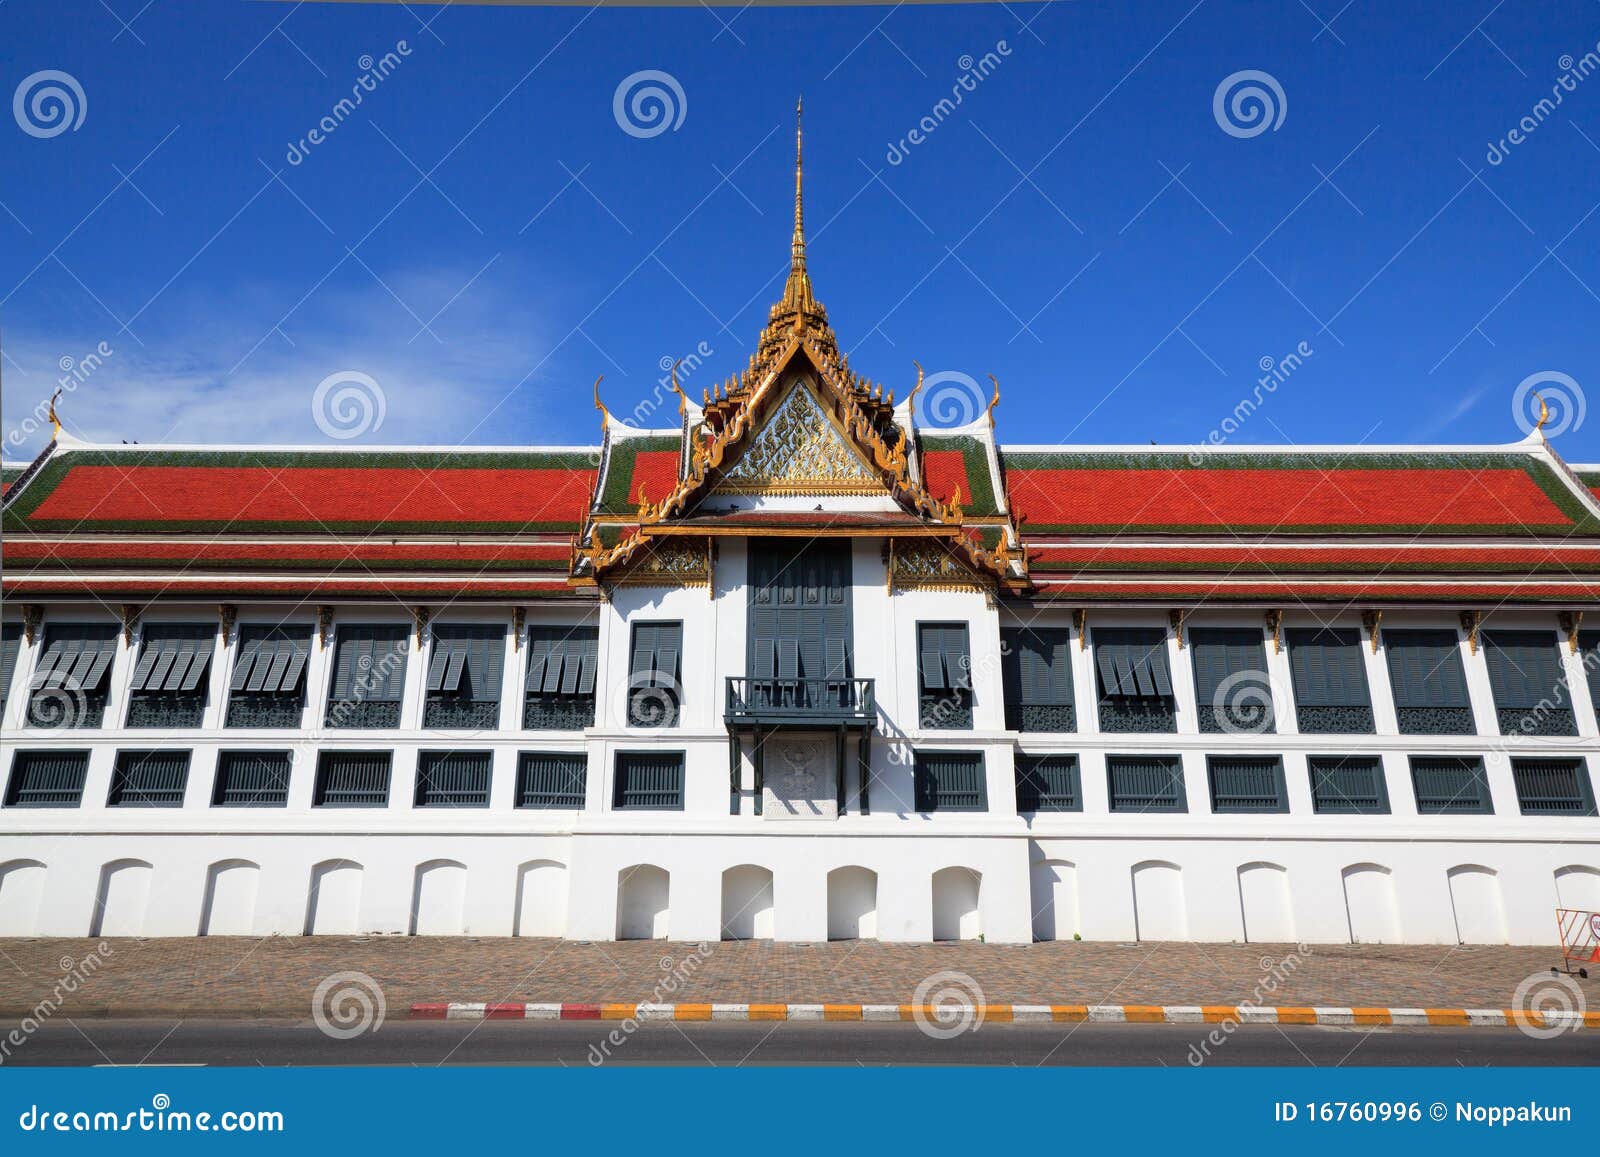 wat phra kaew, grand palace, bangkok, thailand